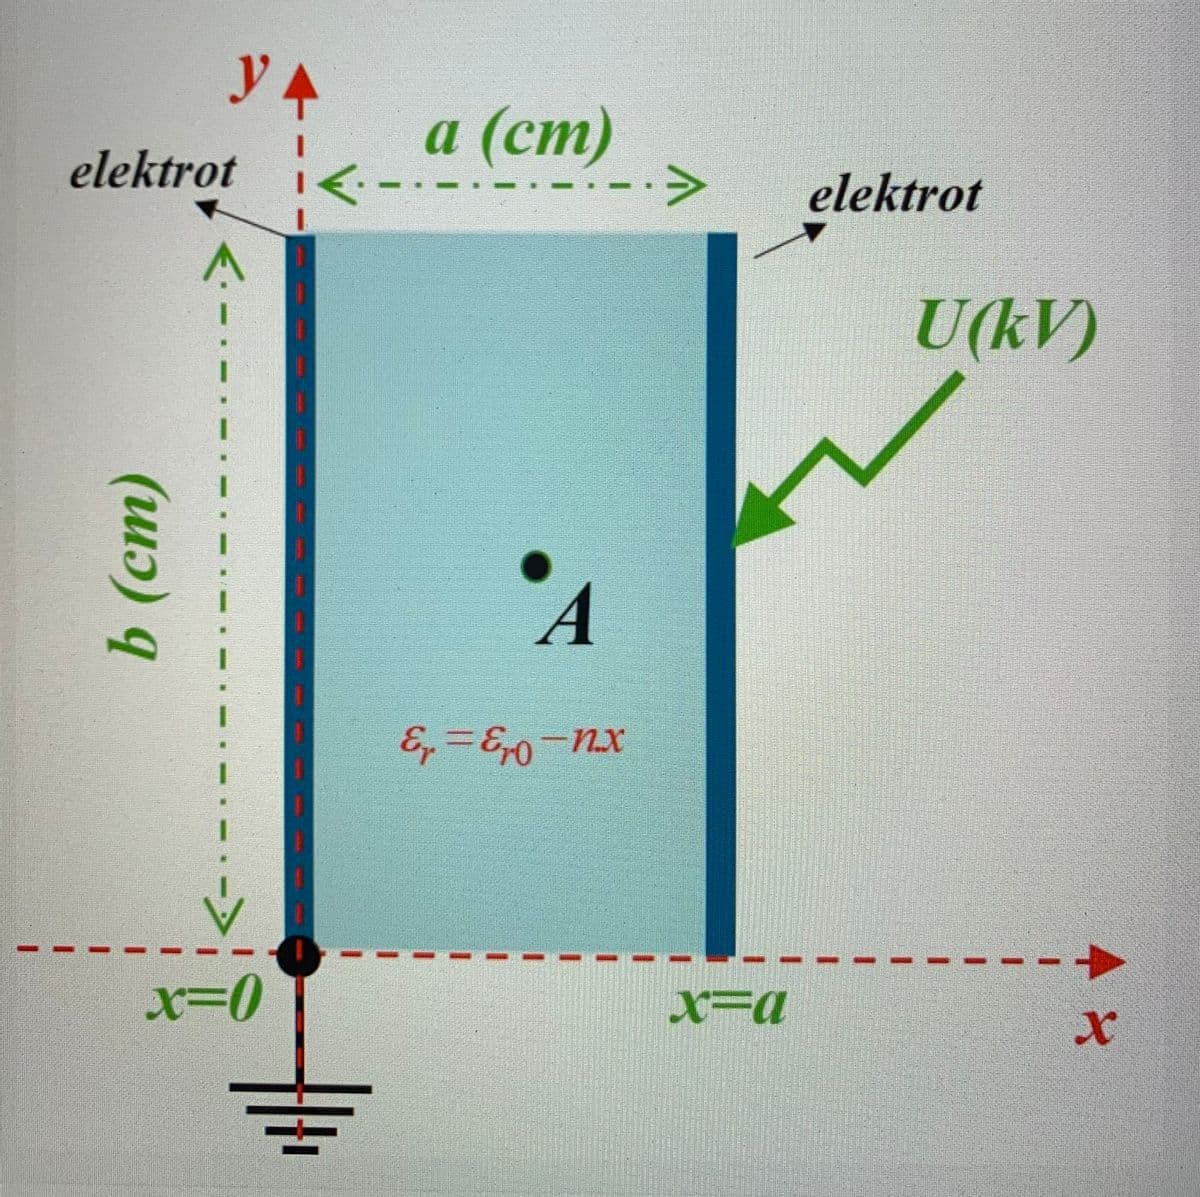 y A
а (ст)
<>
a
elektrot
elektrot
U(kV)
--
一.
x=0
X3a
1.
(шә) q
